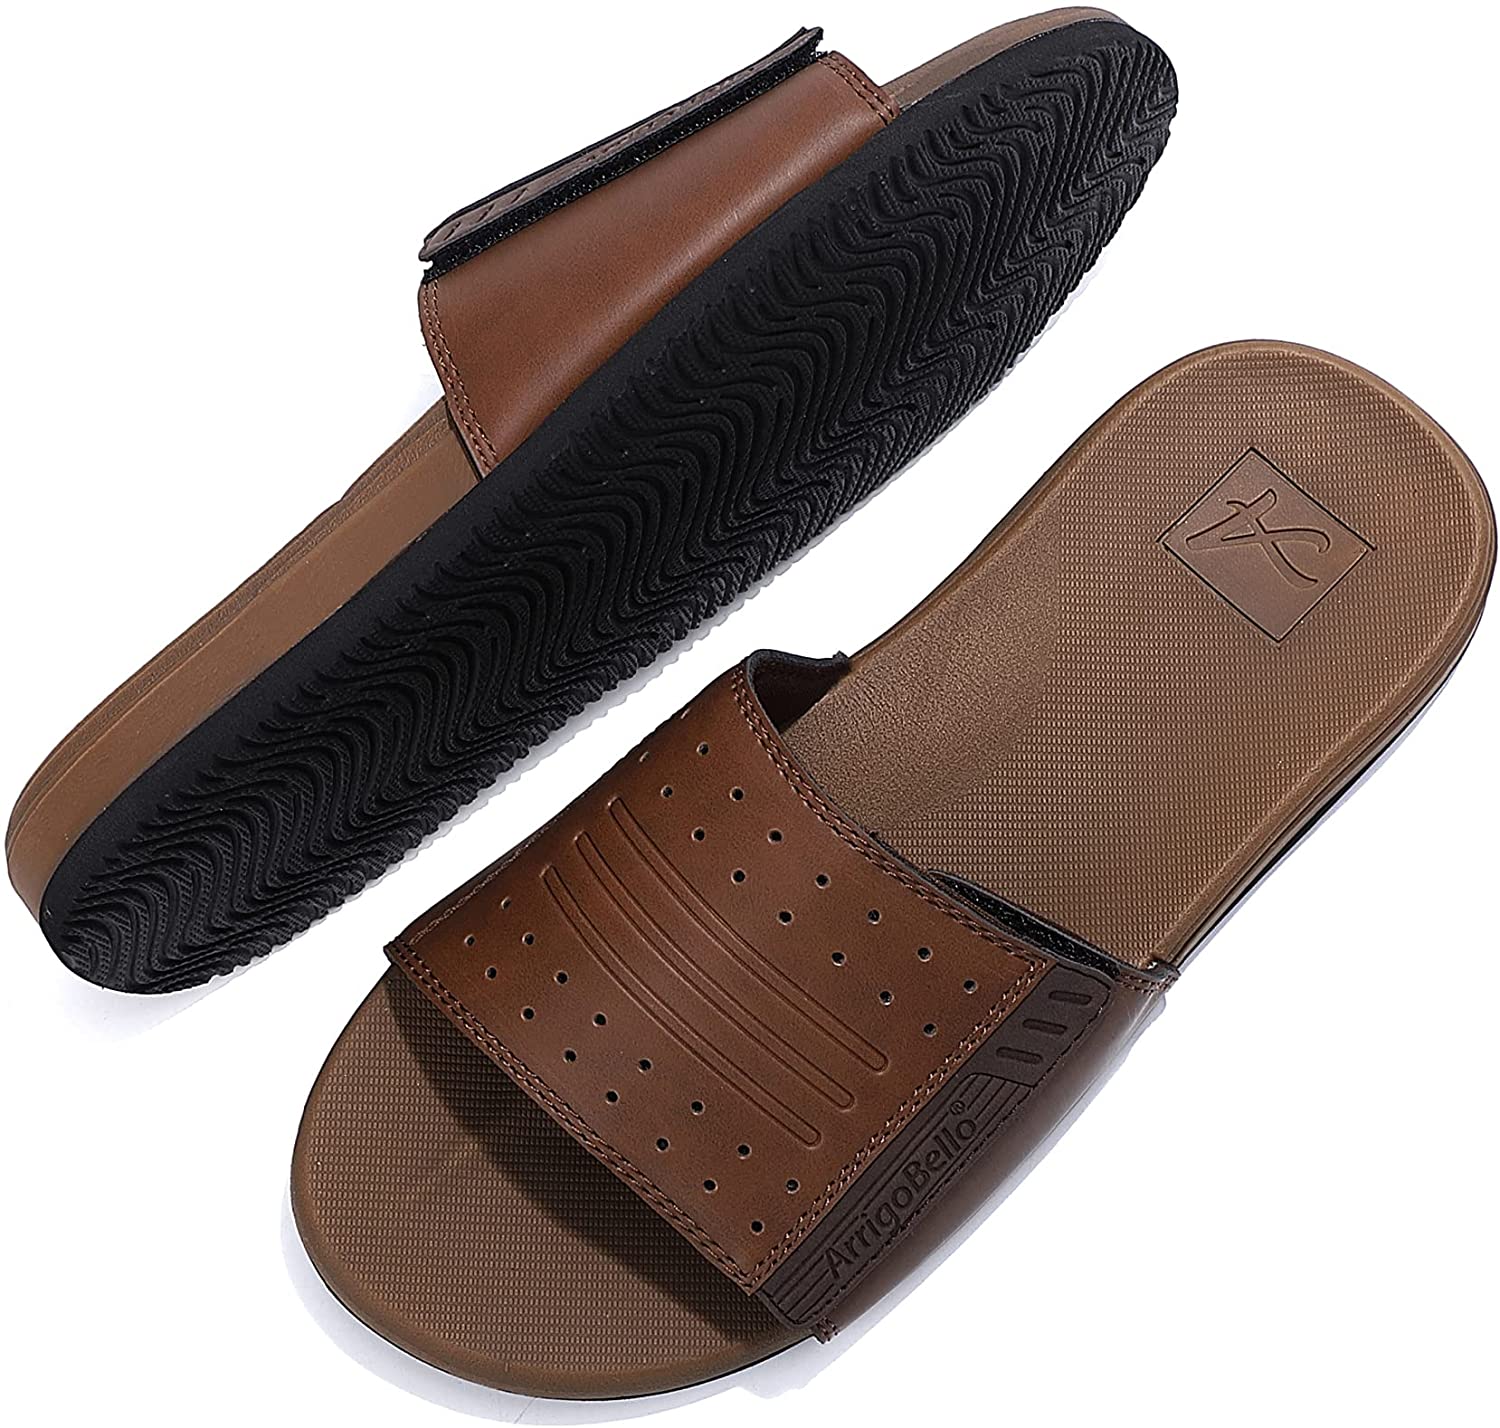 ARRIGO BELLO Flip Flops Women Sandals Leather Soft Comfortable Non-Slip Ladies Summer Slippers Beach Pool Size 4-7UK 